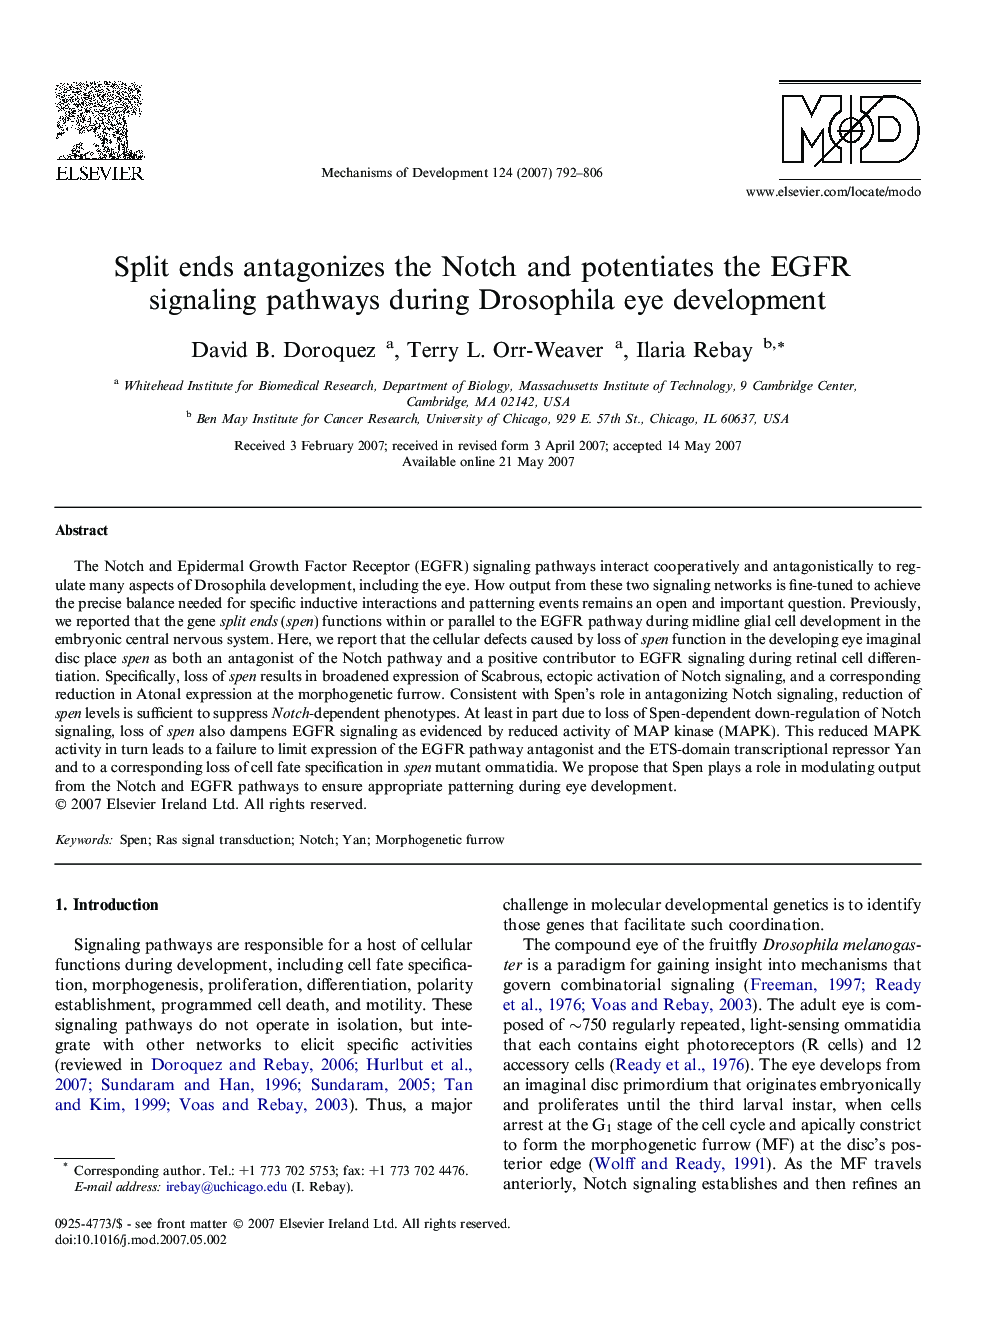 Split ends antagonizes the Notch and potentiates the EGFR signaling pathways during Drosophila eye development